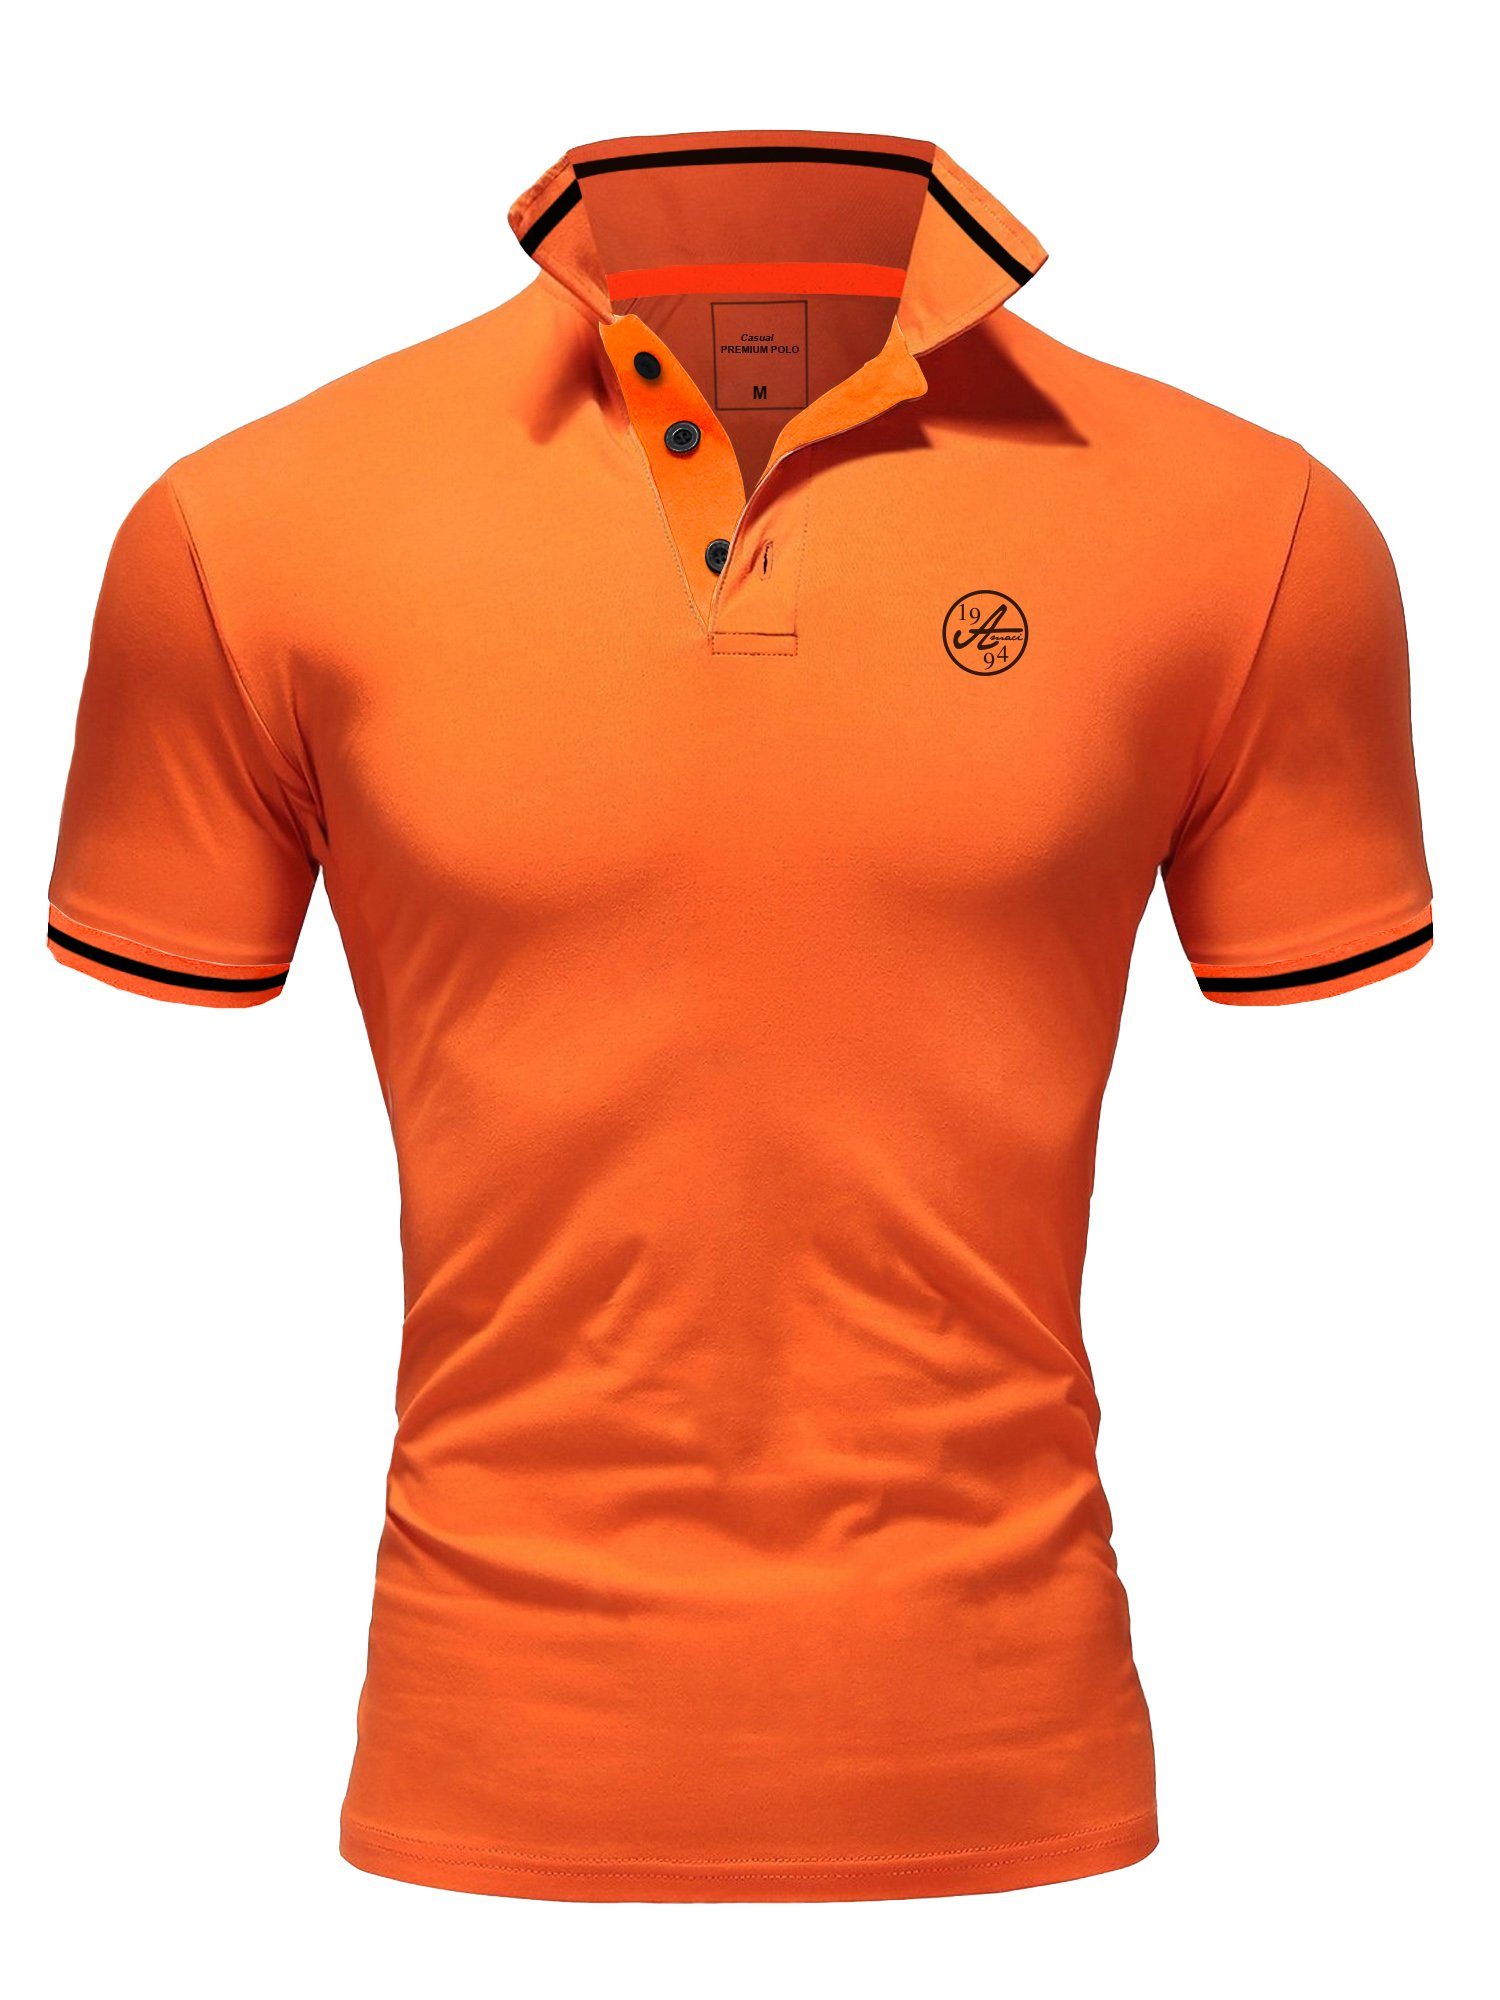 Orange/Schwarz Stickerei Poloshirt MACON Herren Polohemd Amaci&Sons Kontrast Basic Kurzarm T-Shirt